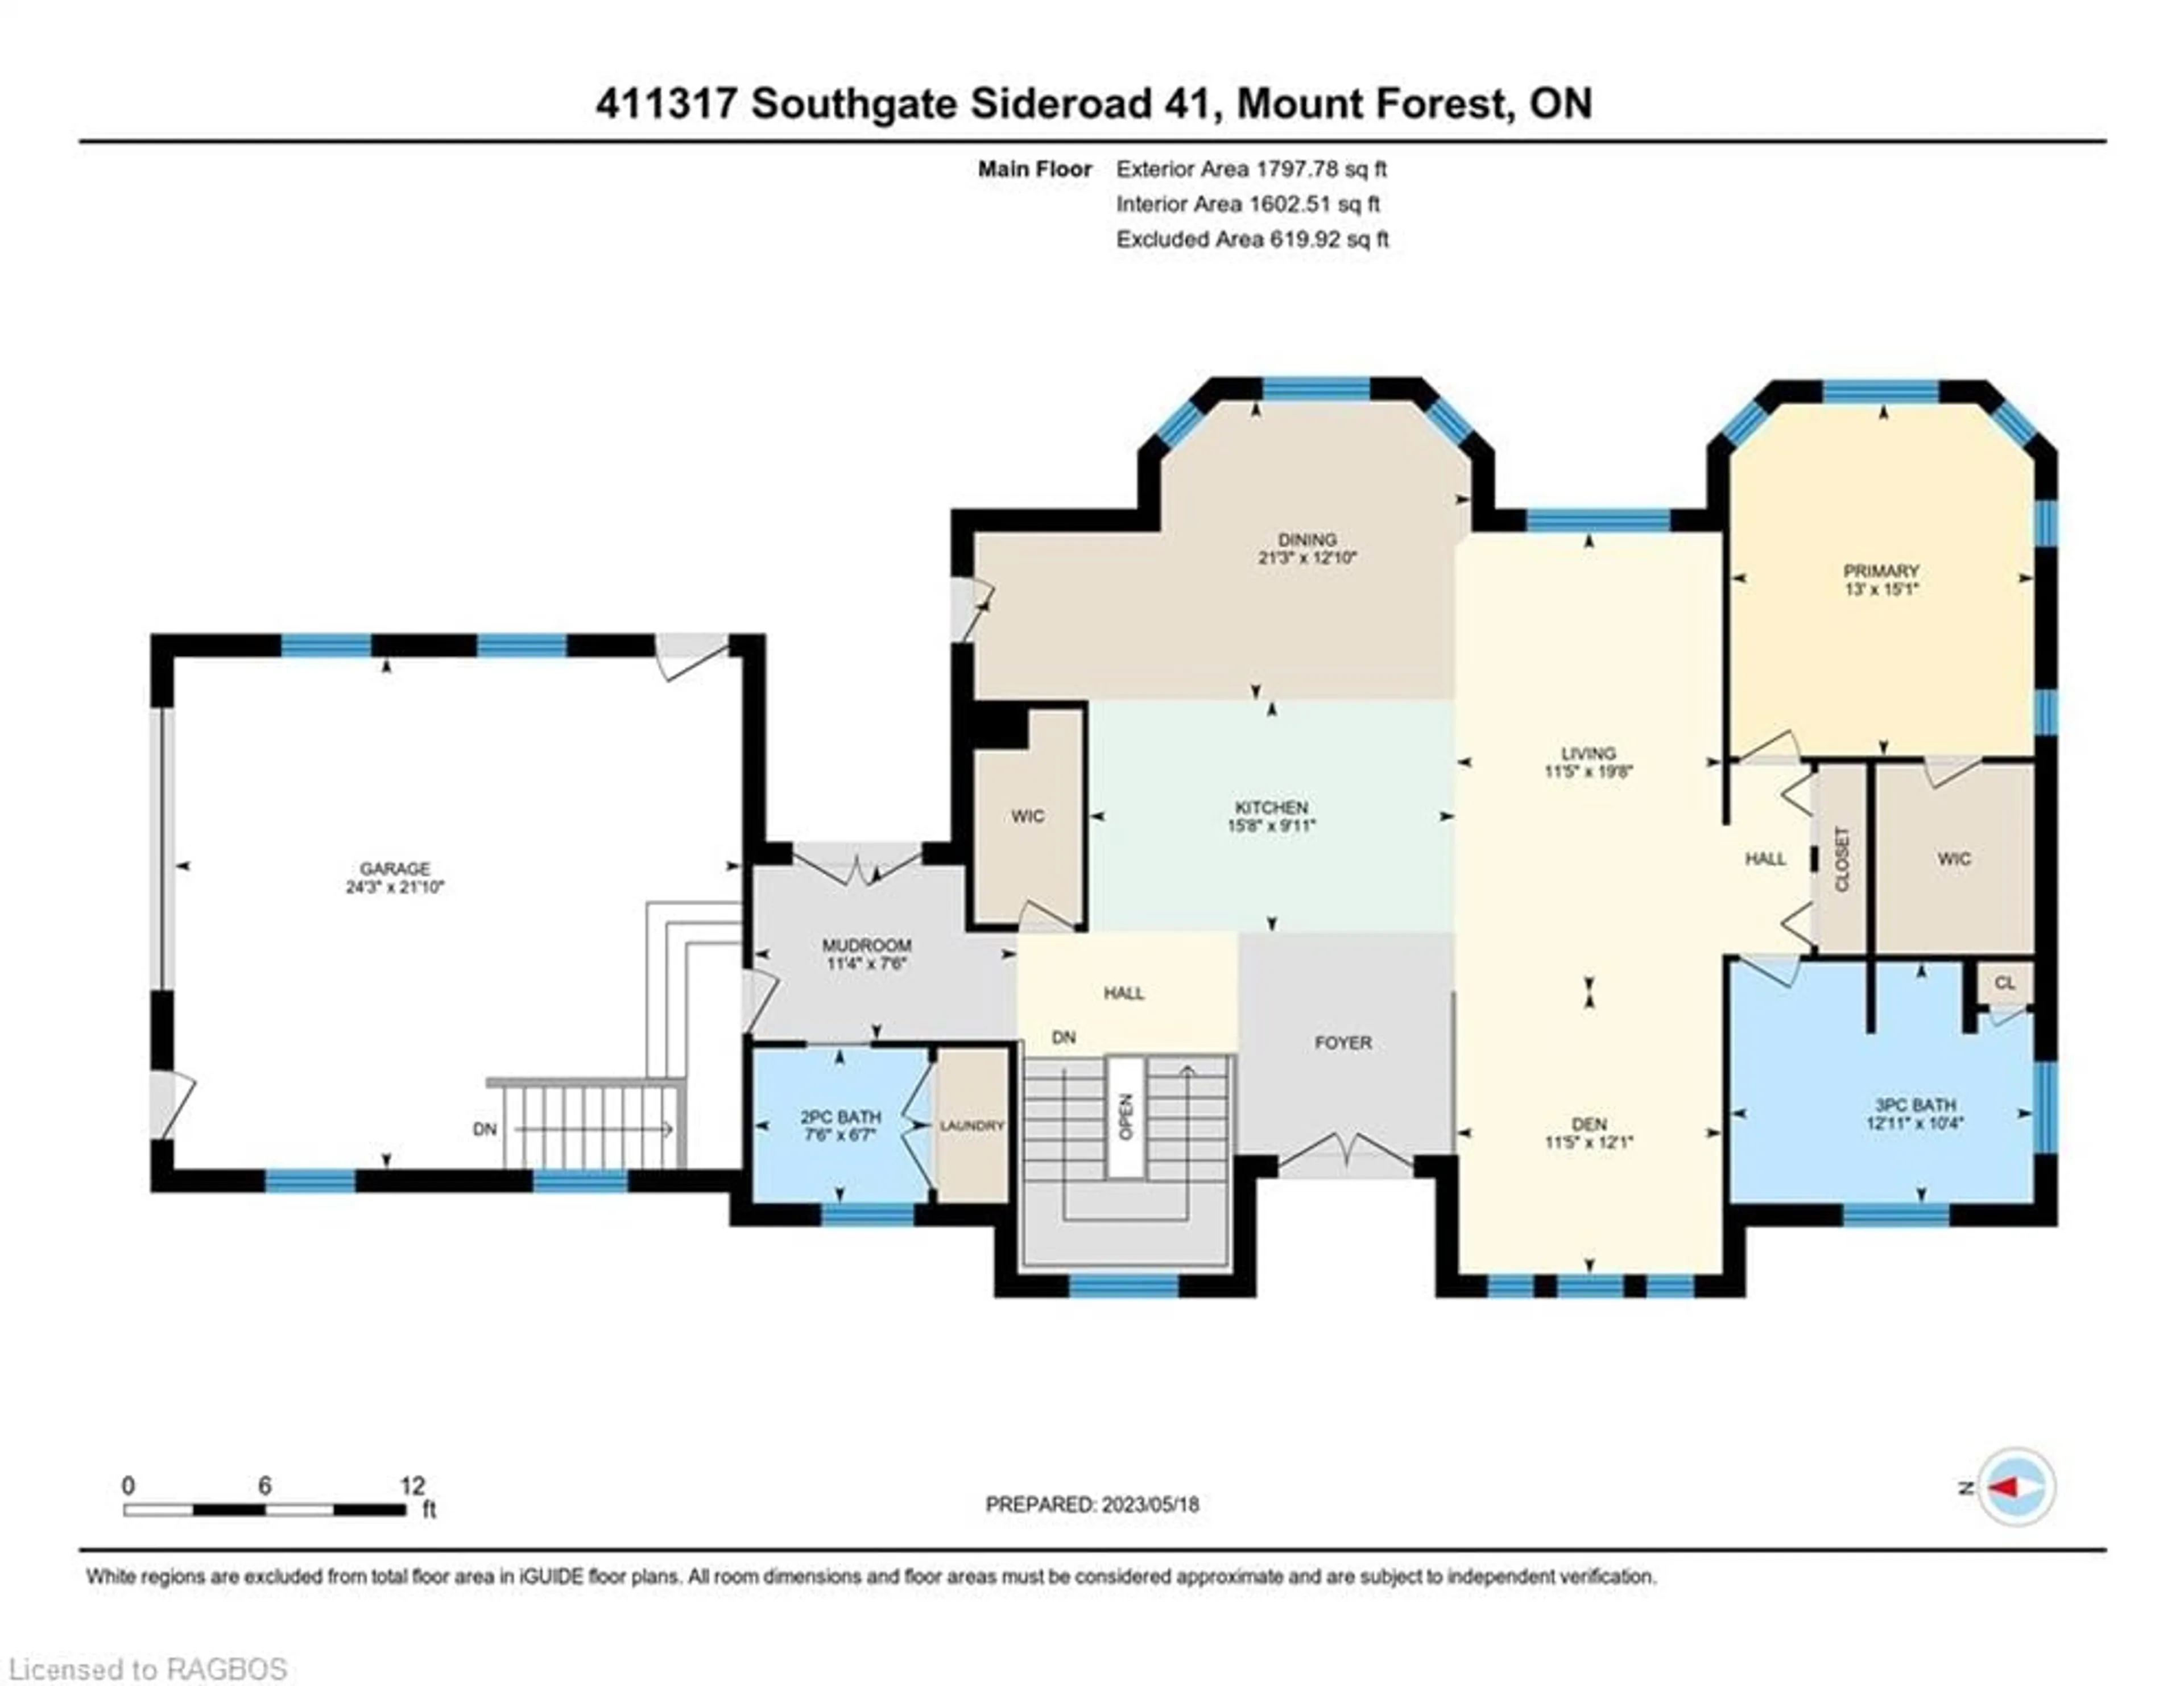 Floor plan for 411317 Southgate Sideroad 41, Southgate Ontario N0G 2L0